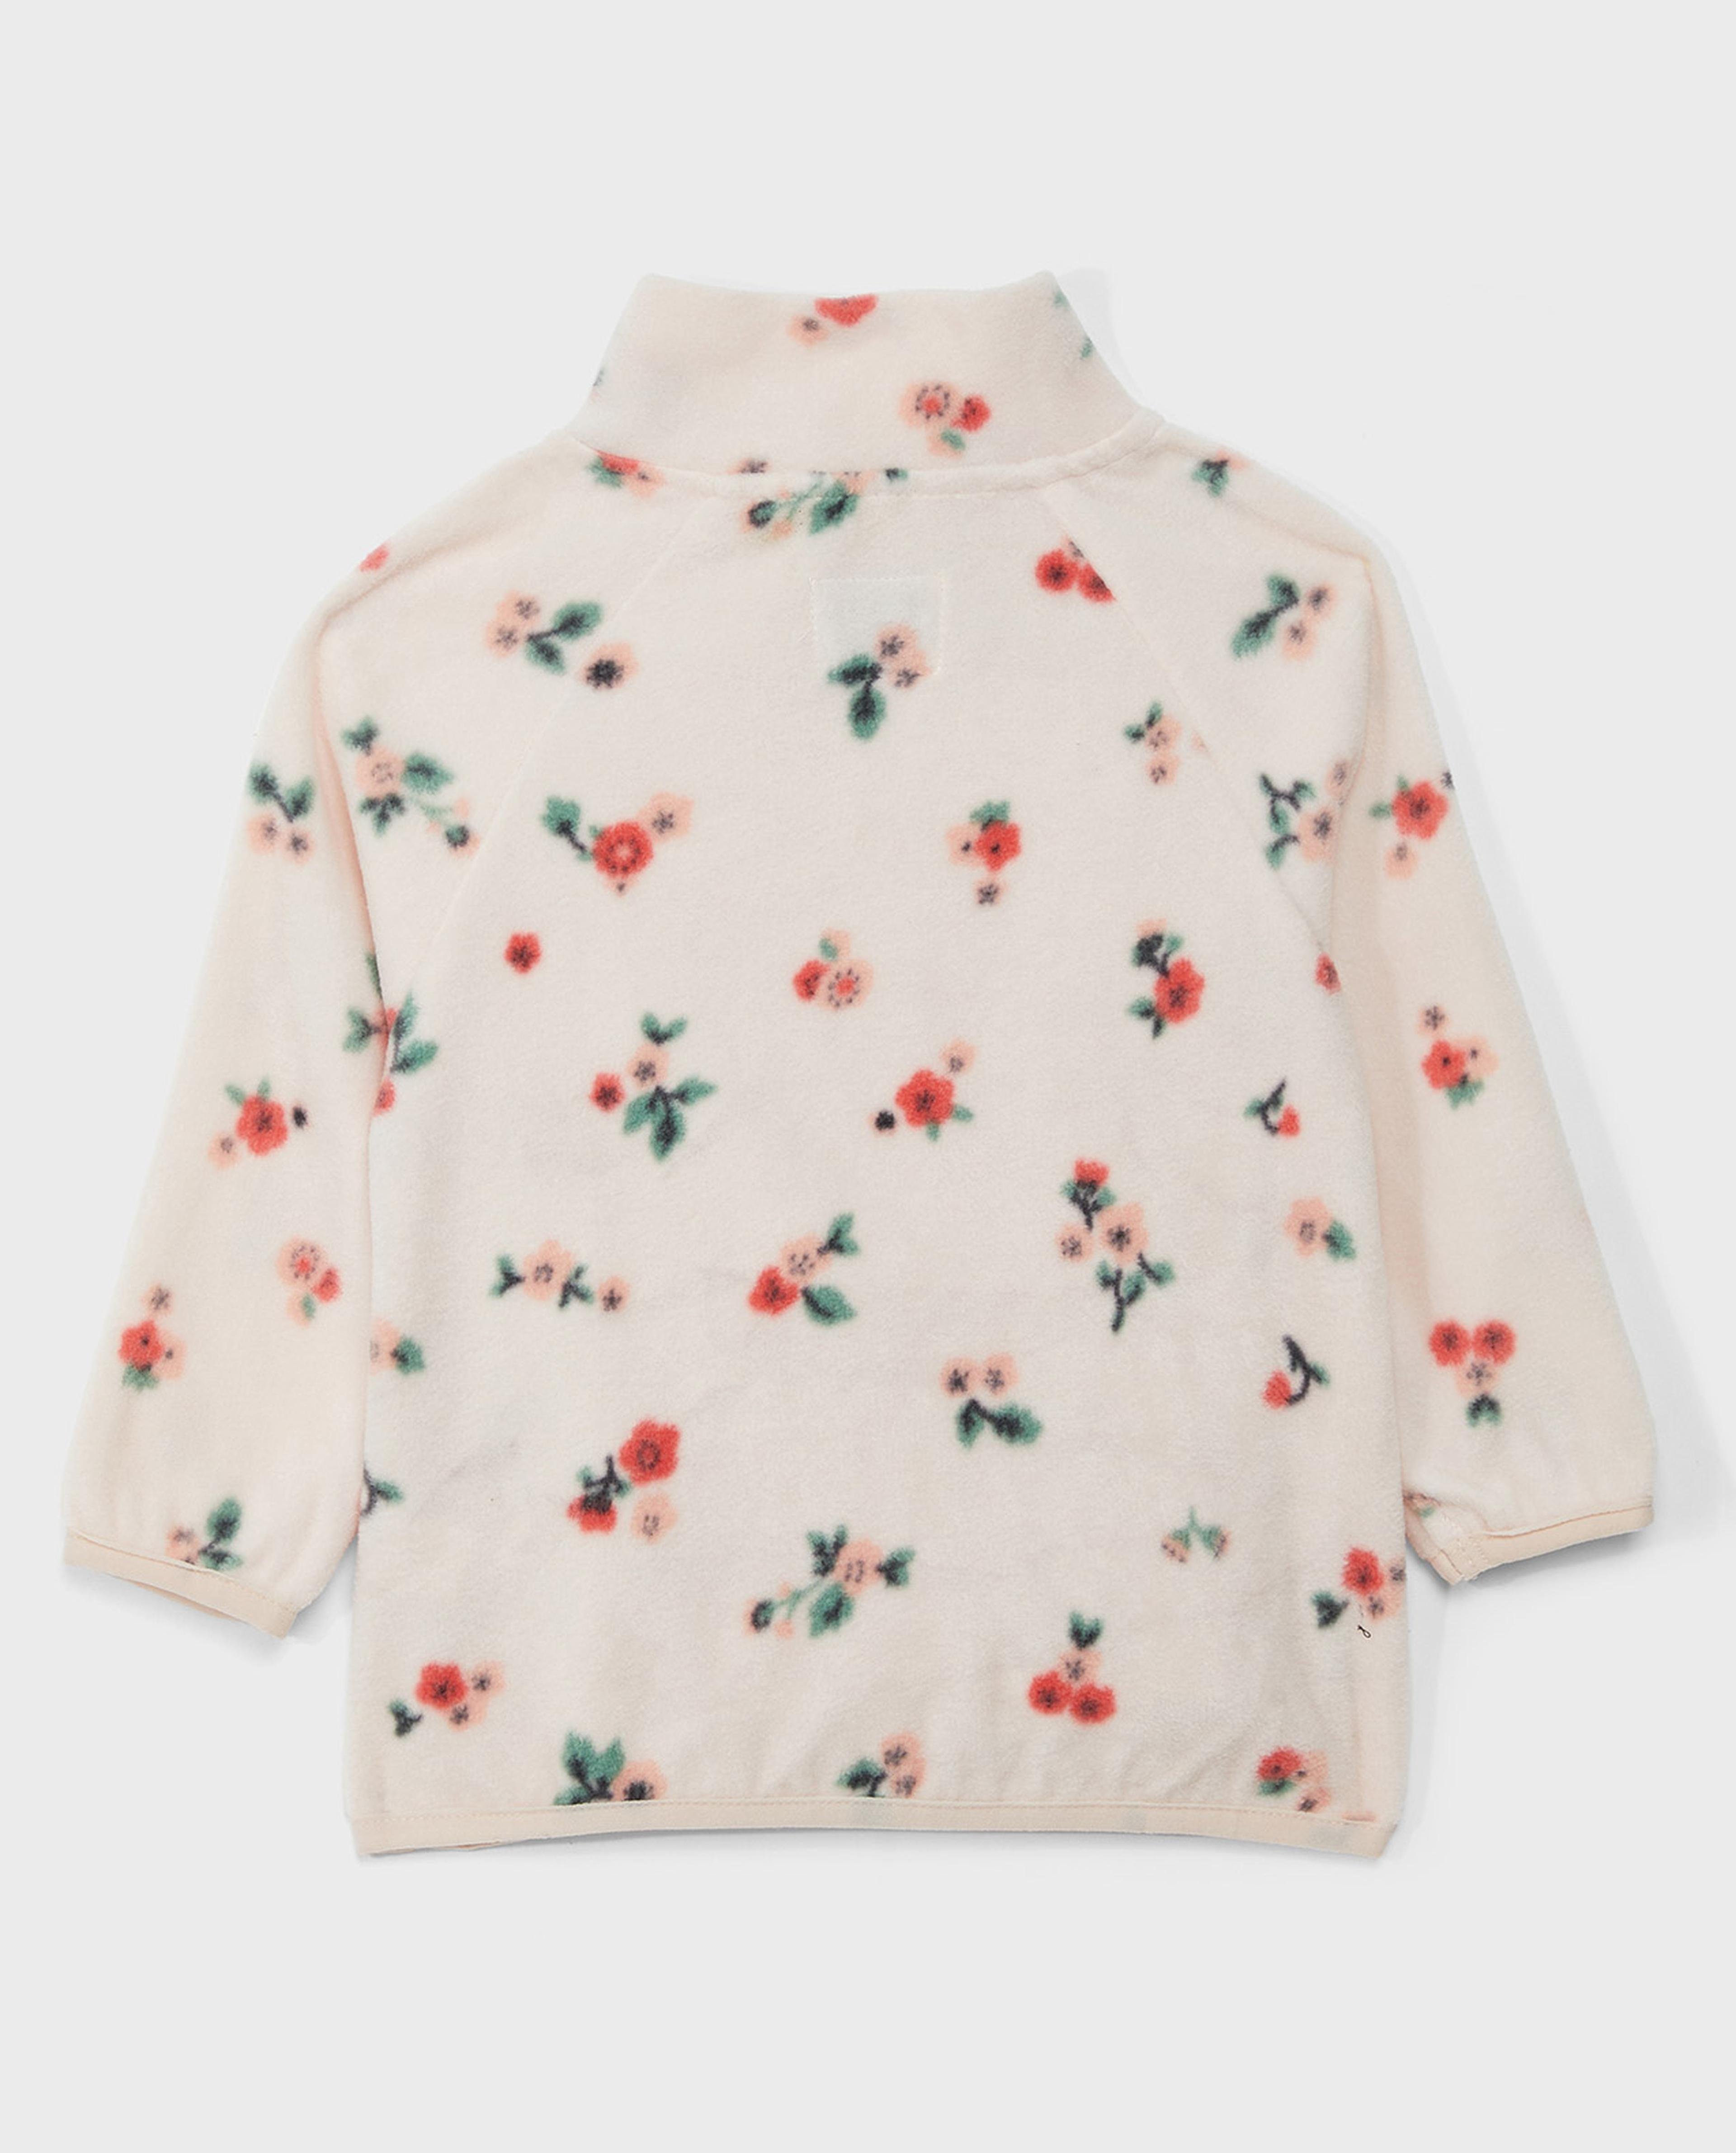 Floral Print Jacket with Zipper Closure